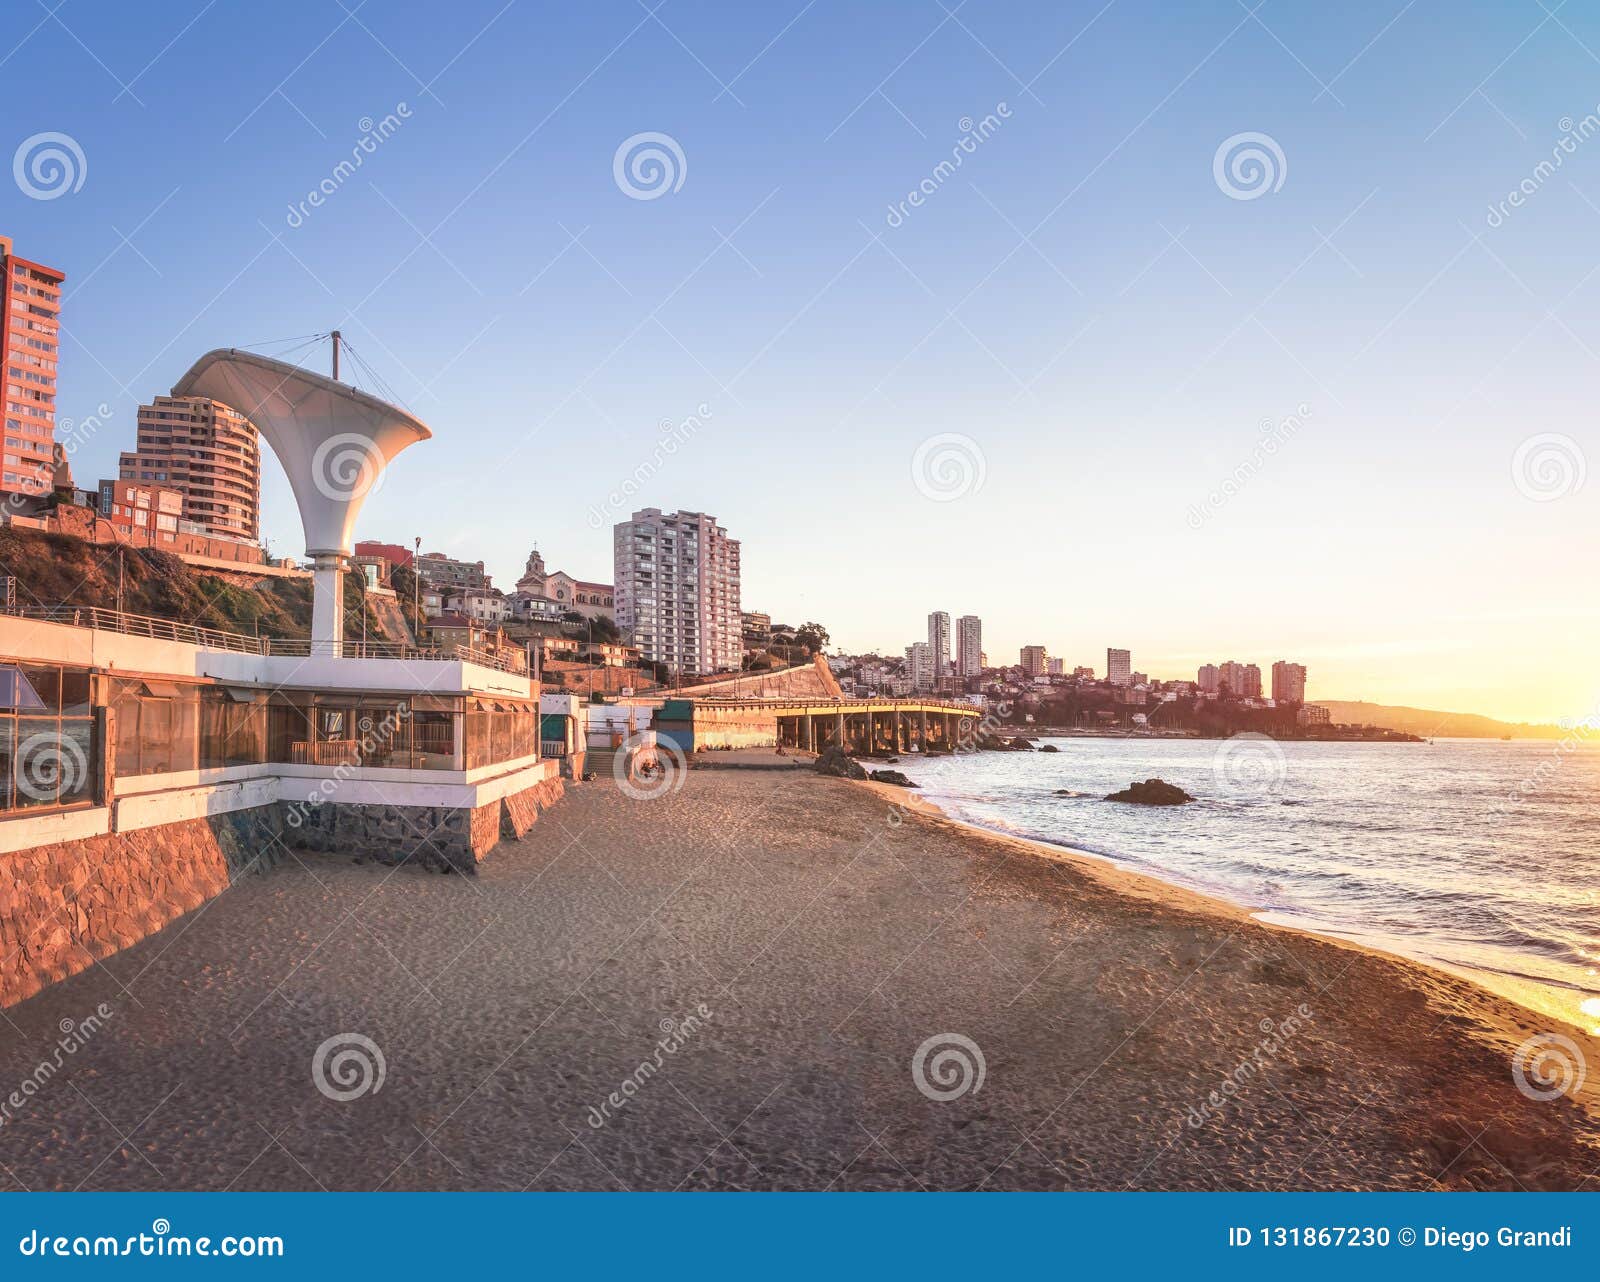 caleta abarca beach at sunset - vina del mar, chile